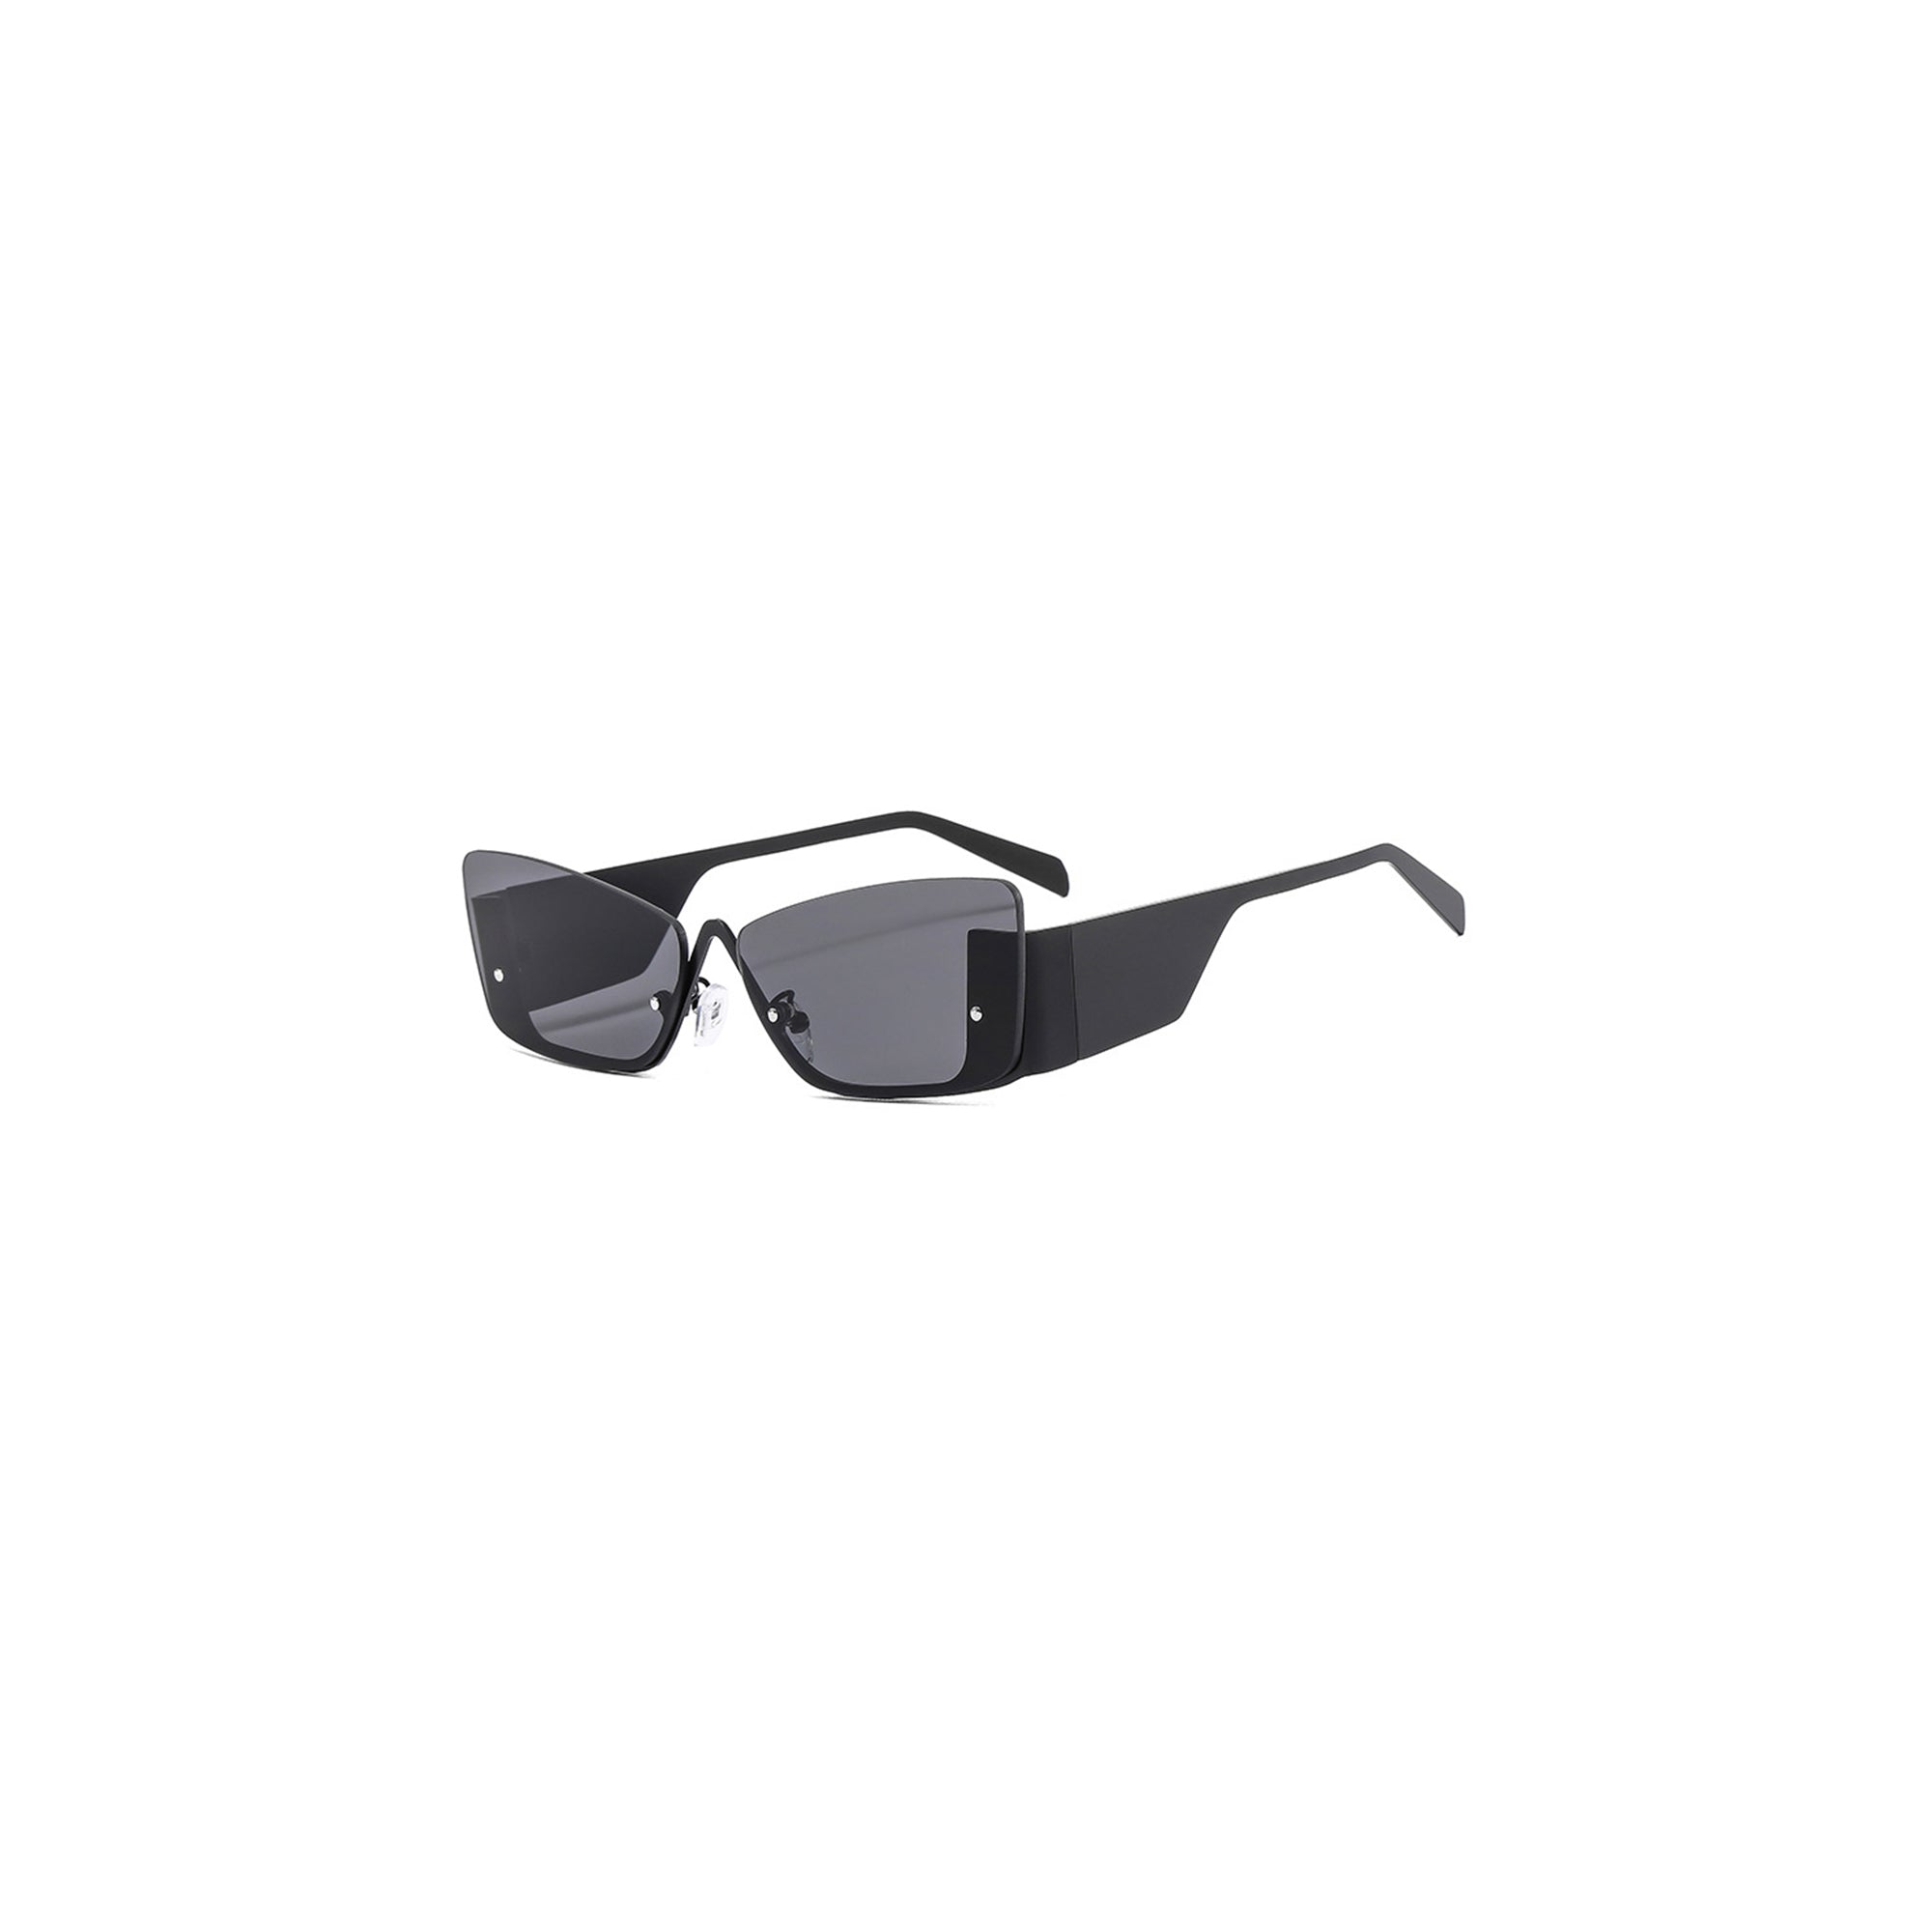 DAMAGE ASIA OPTICALS Modern Half Frame Sunglasses